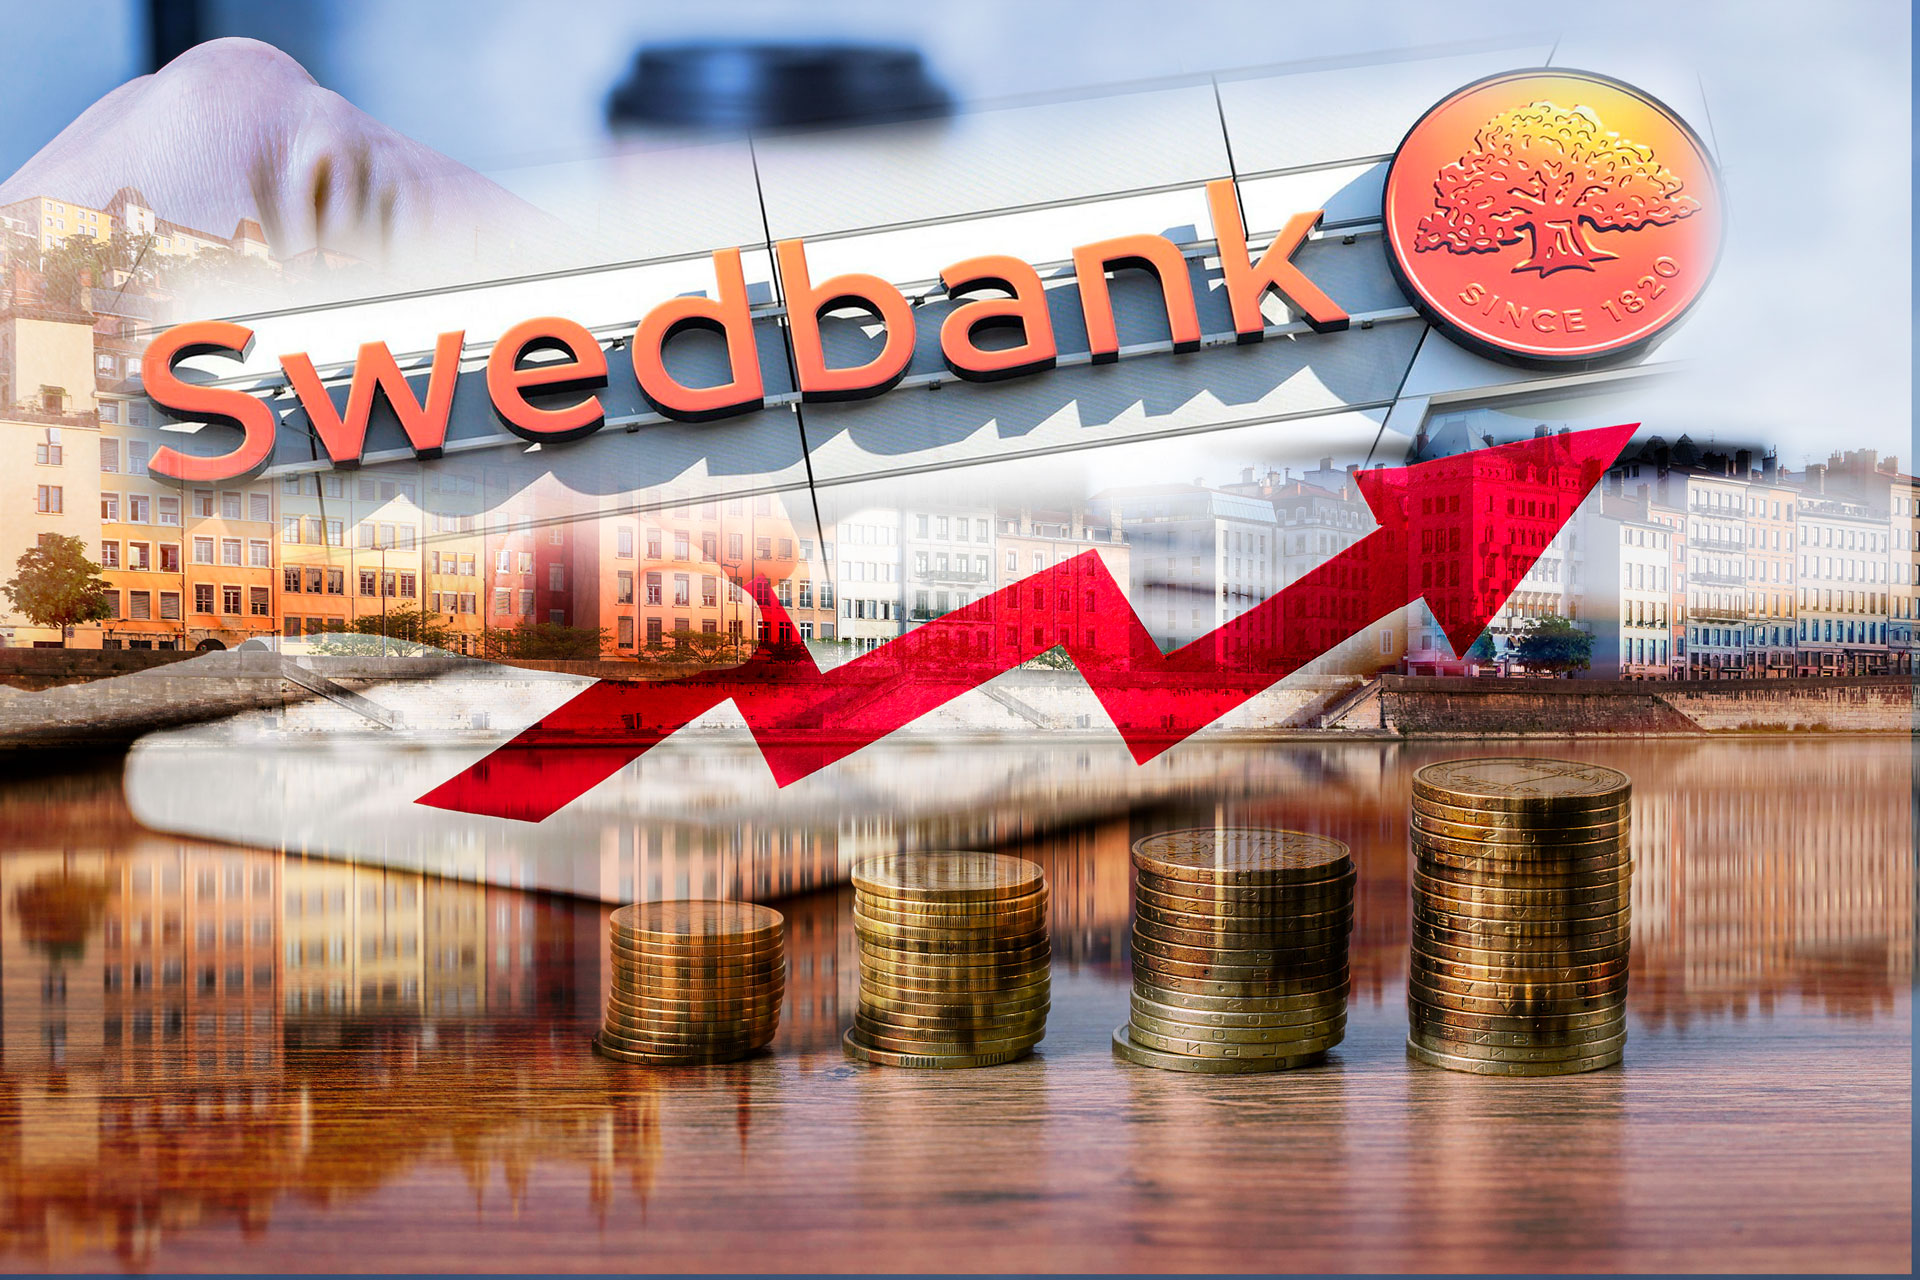 سوئدبانک: دو سال ریاضت اقتصادی پیش رو داریم